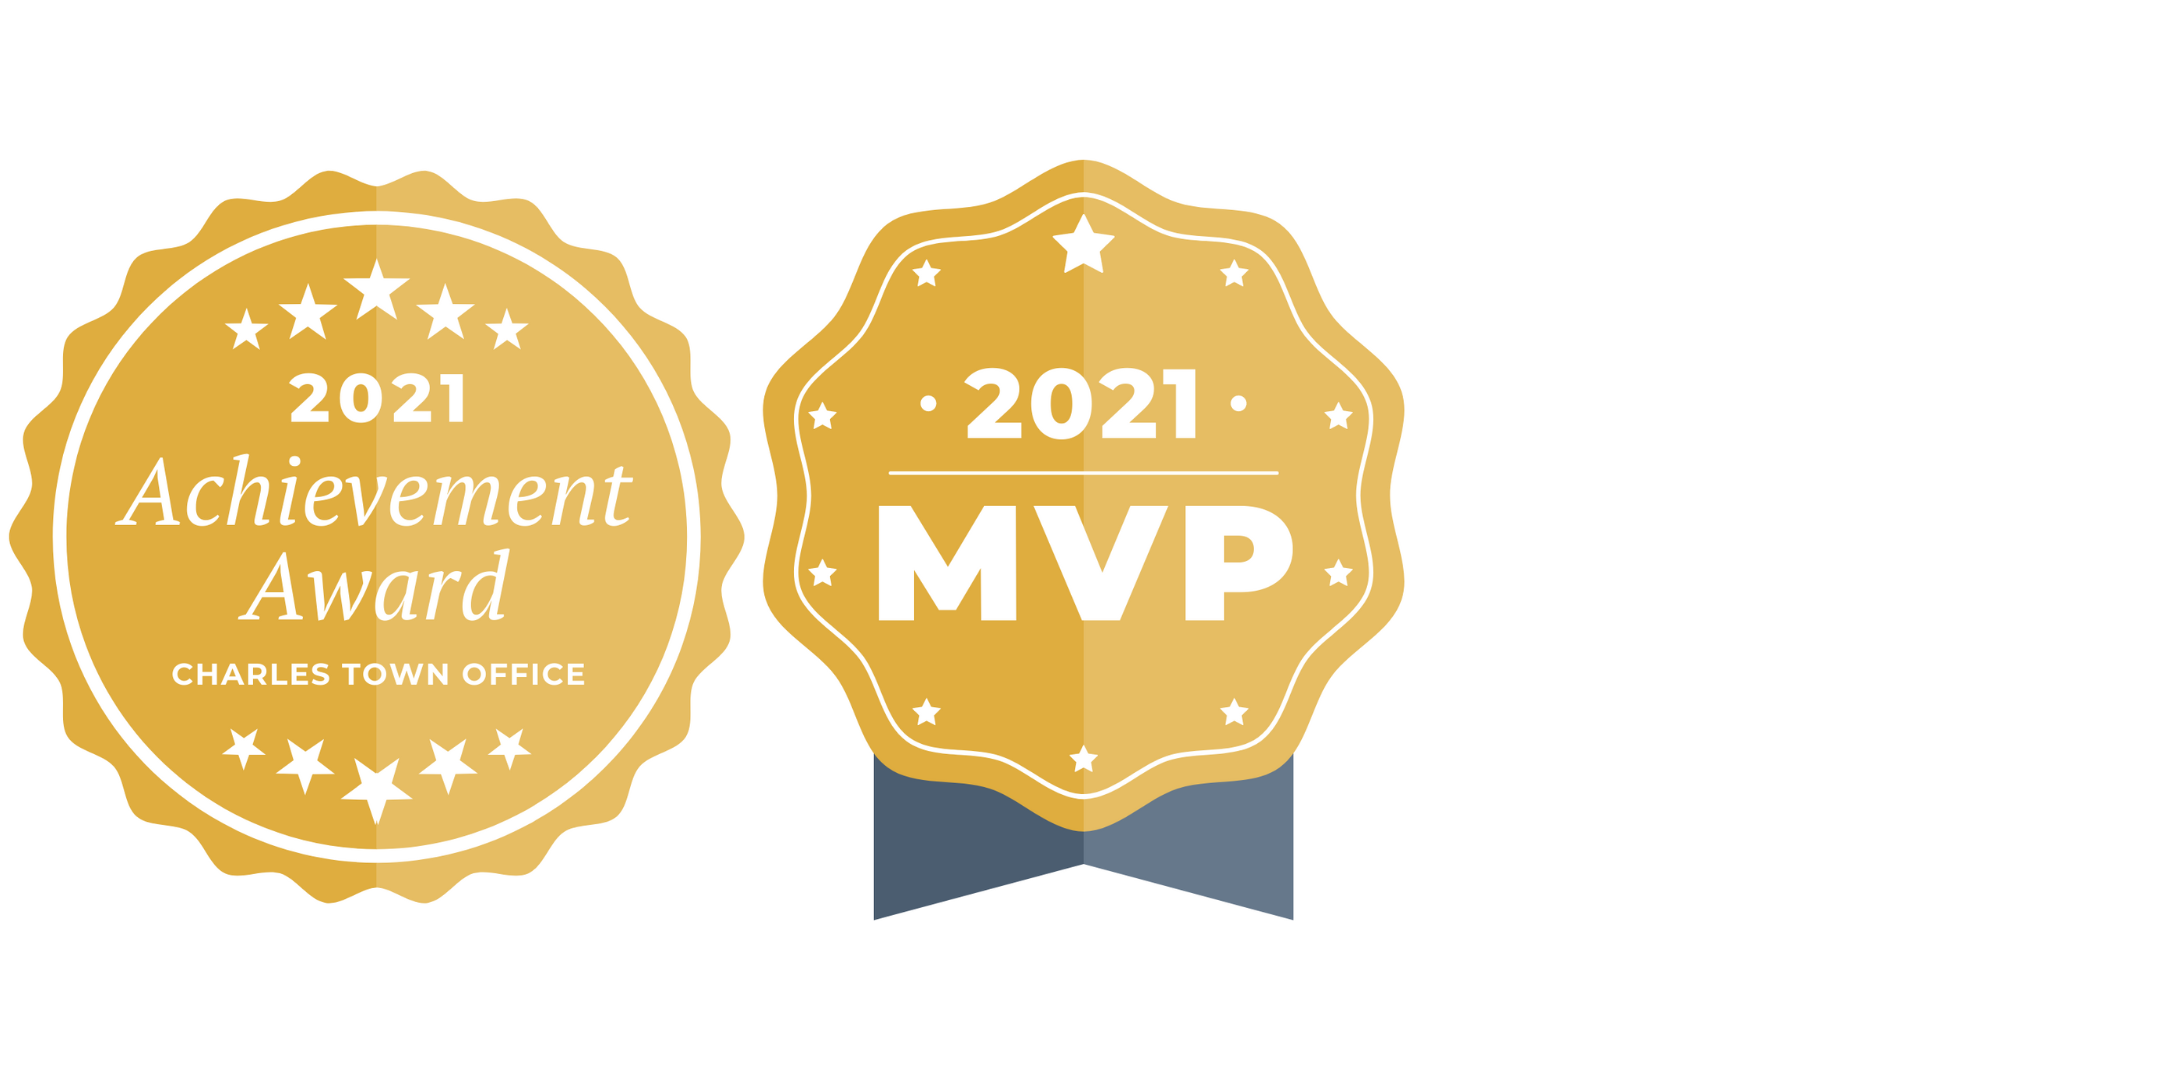 2021 Achievement Award - Charles Town Office & MVP